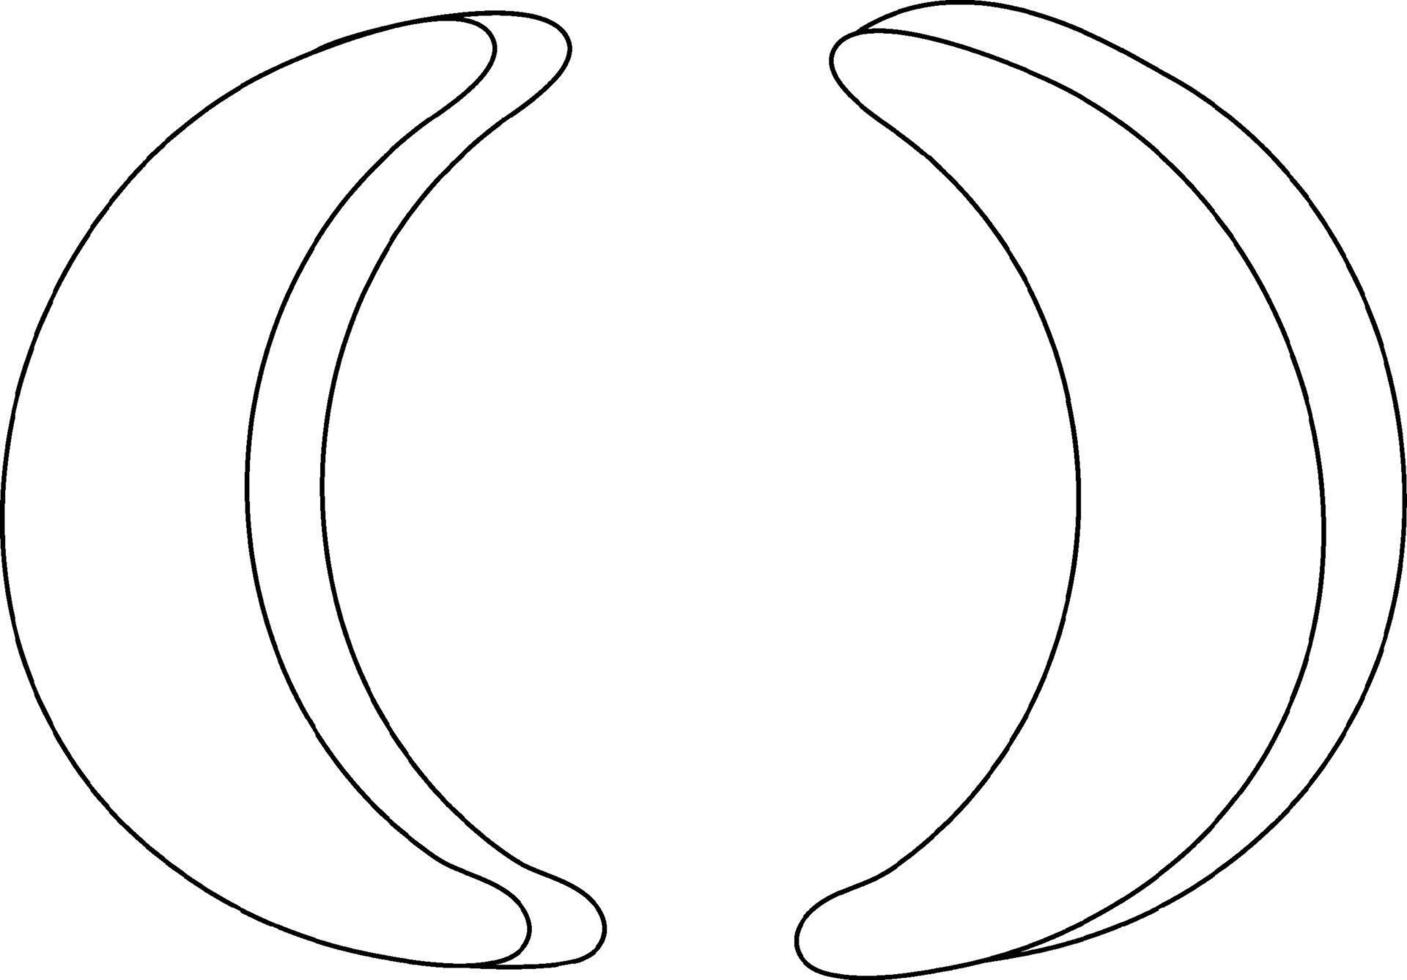 Klammersymbol Schwarz-Weiß-Doodle-Charakter vektor